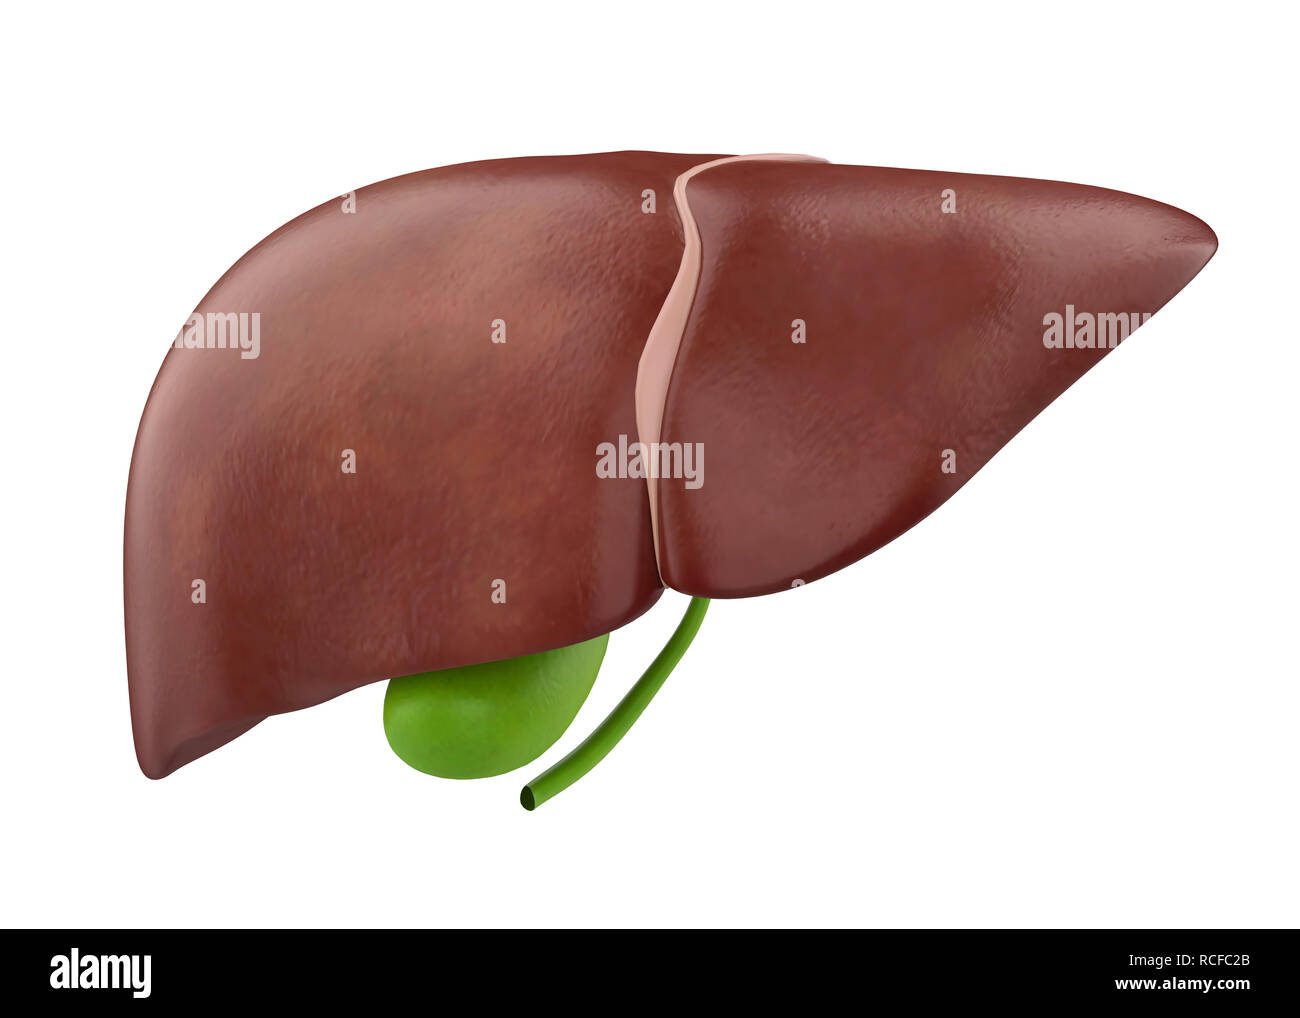 Liver and Gallbladder Anatomy Stock Photo